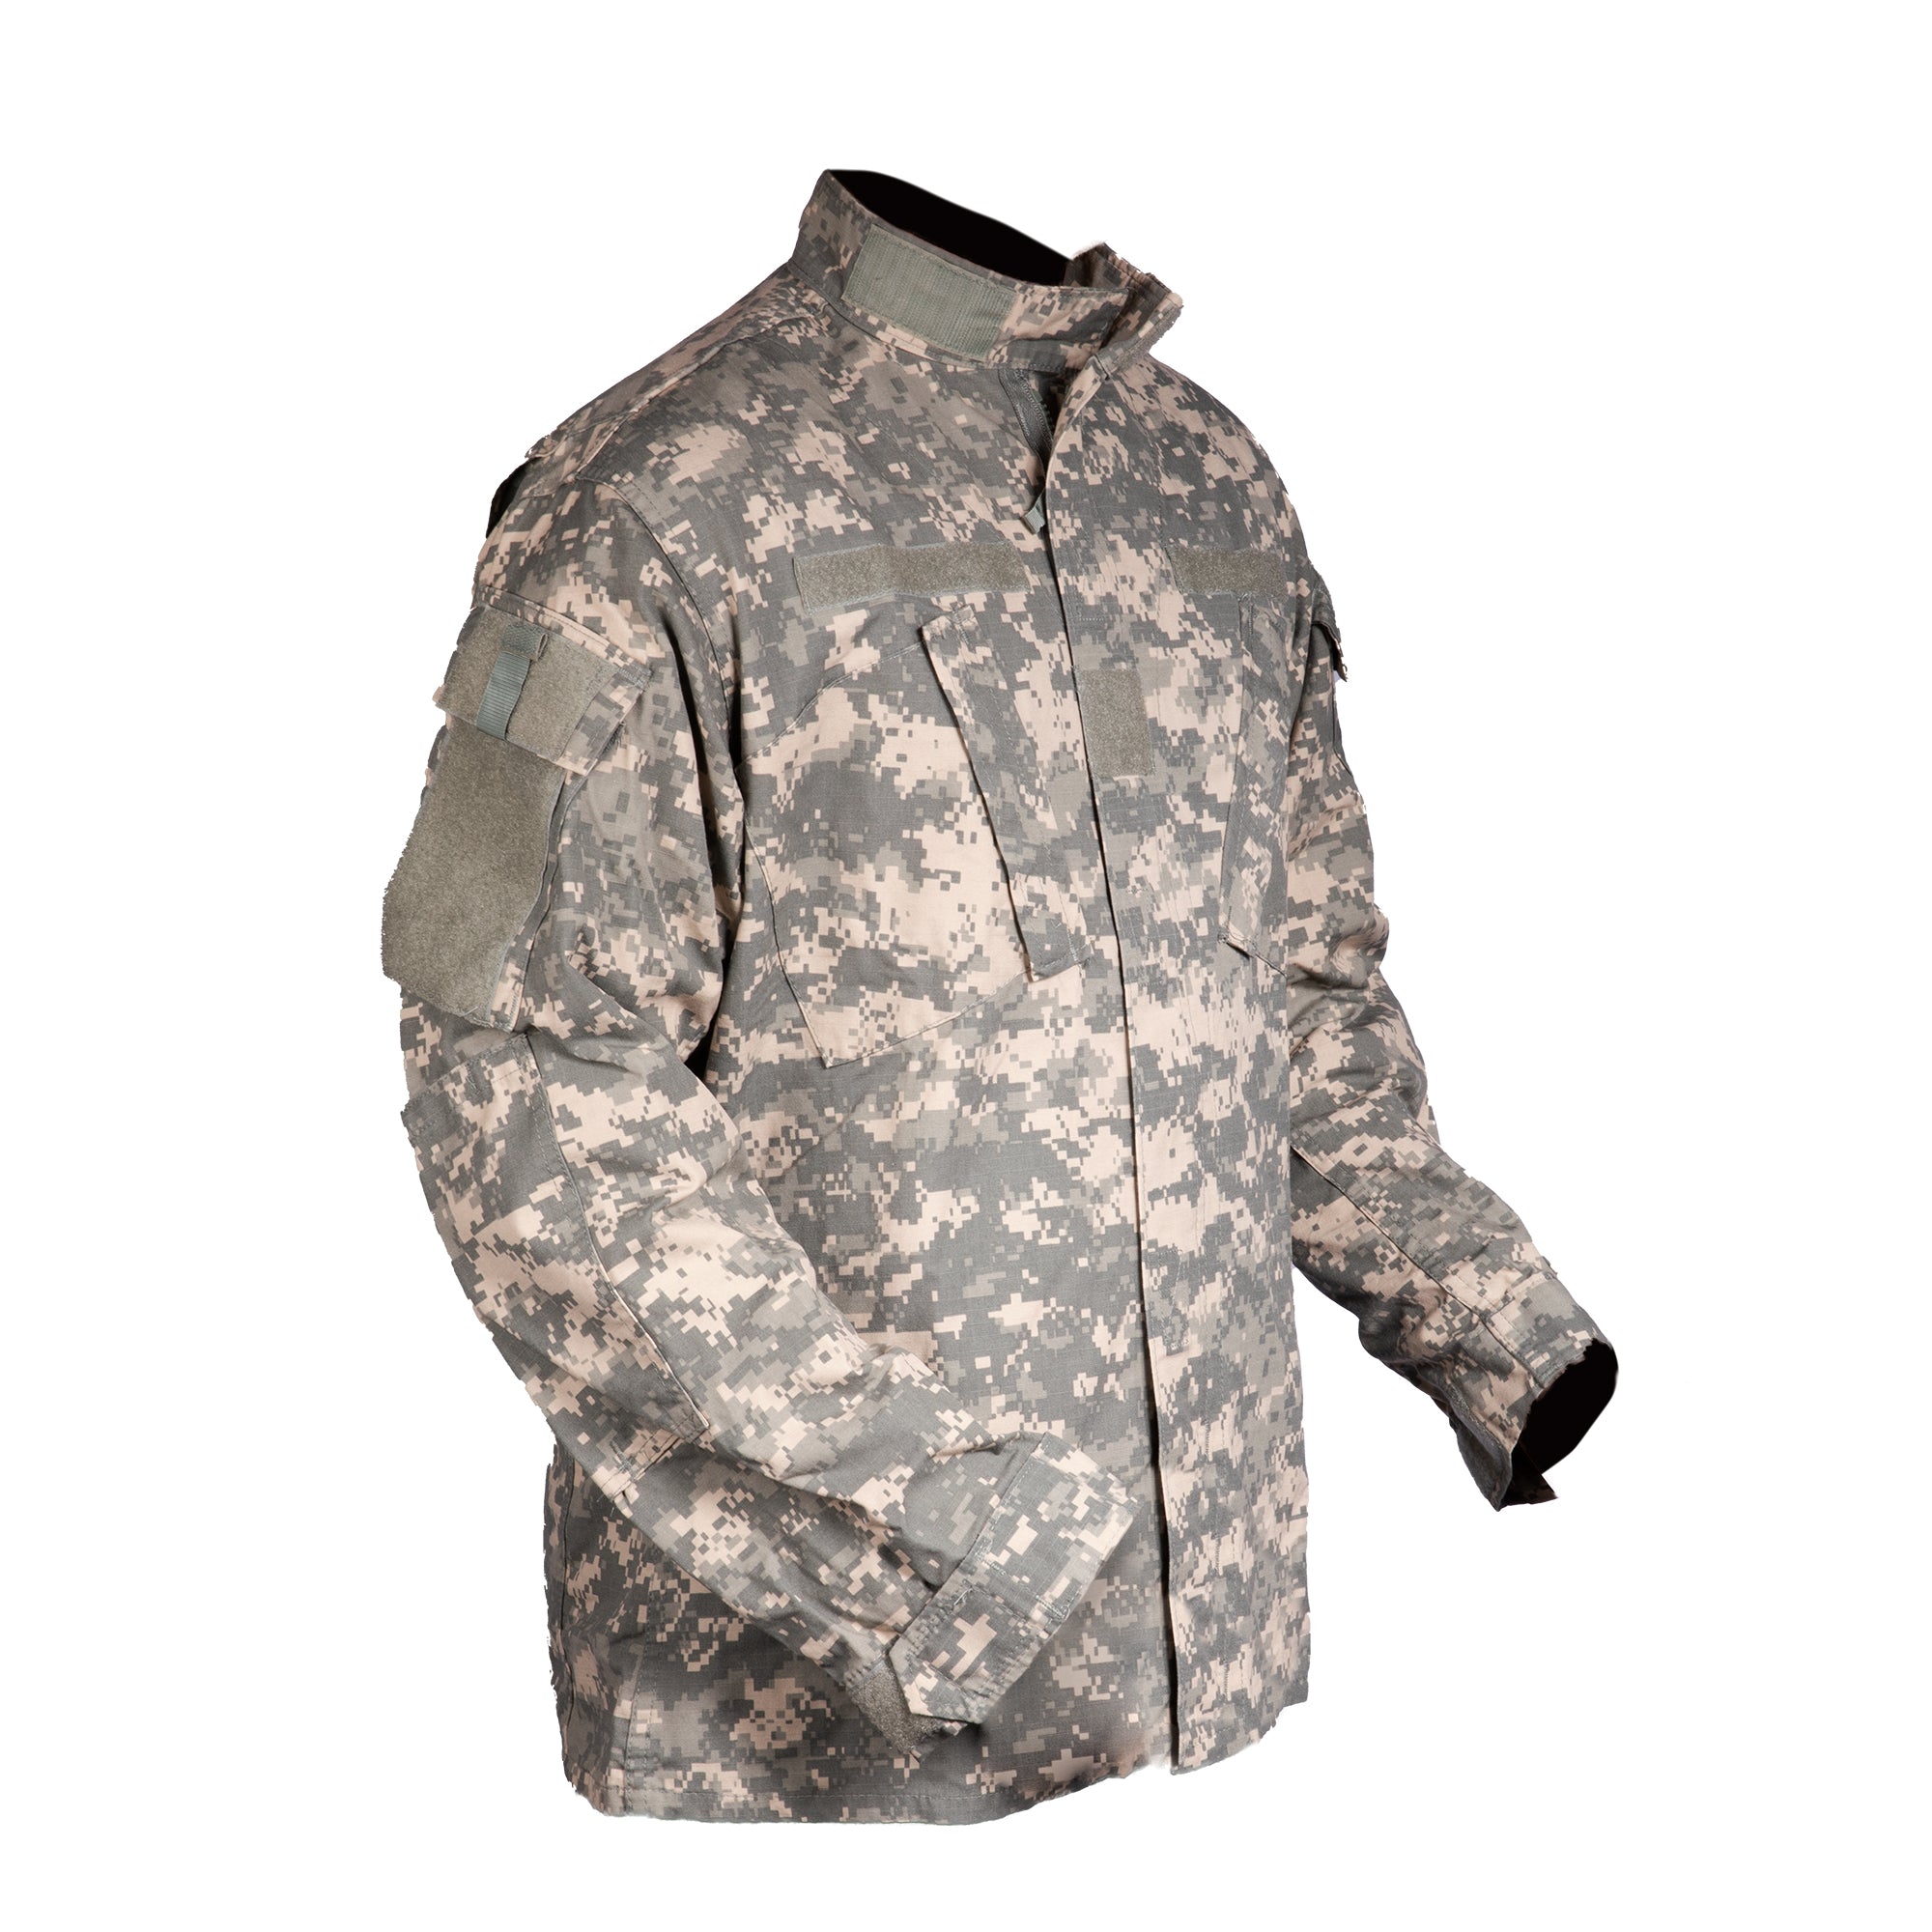 USGI ACU Garrison Uniform Shirt, UCP Camo - Medium Extra Long, New